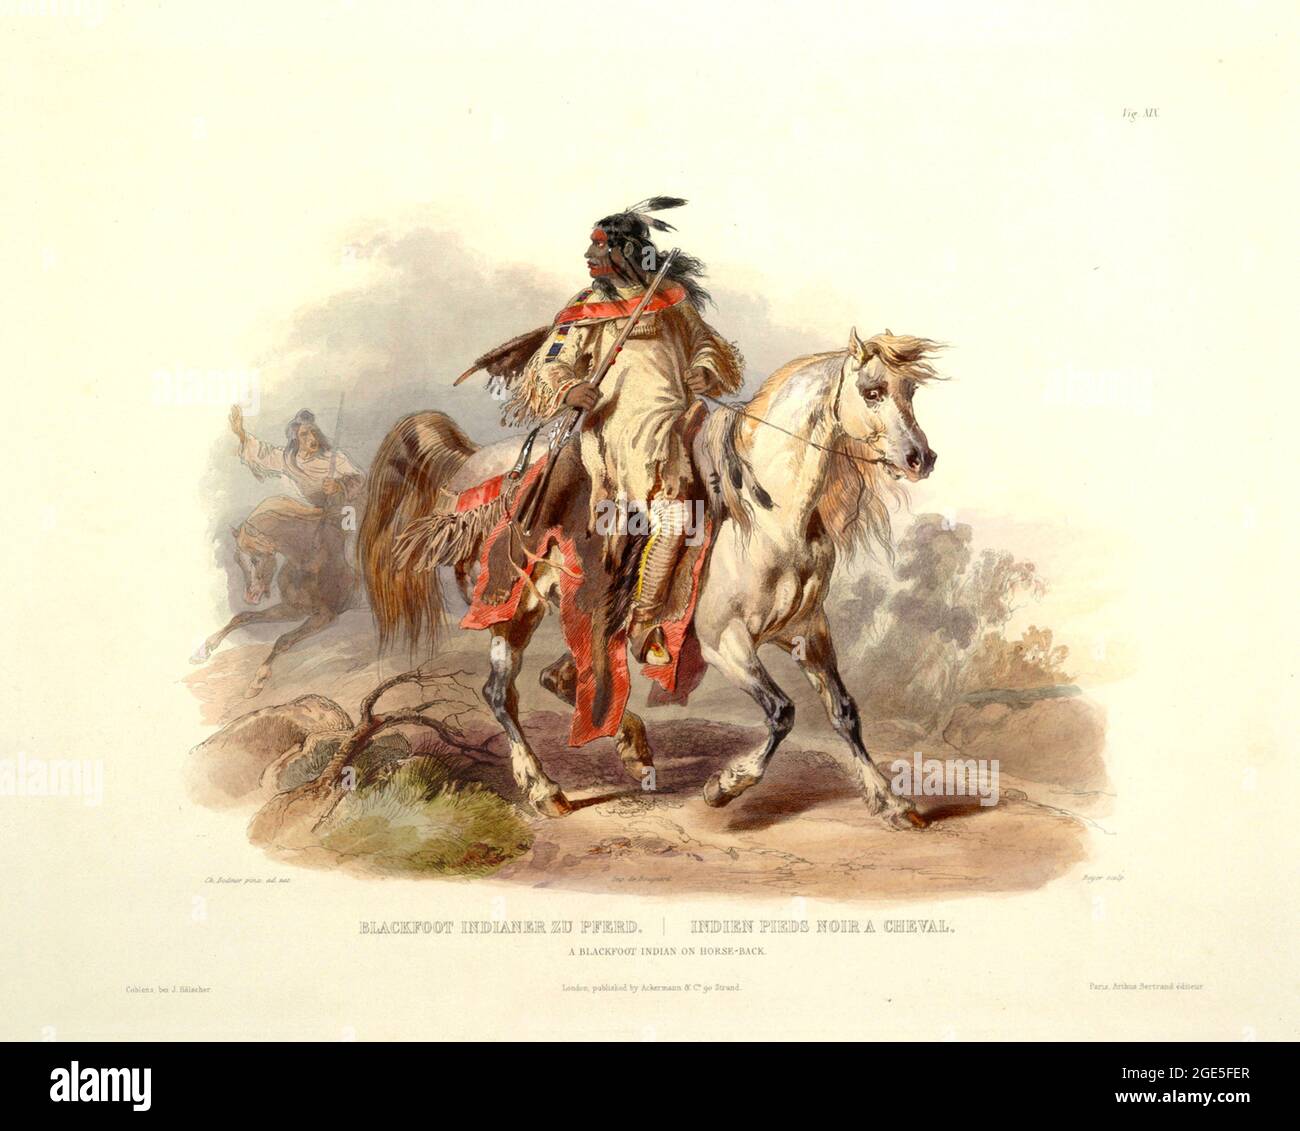 Karl Bodmer - Travels in America -  Blackfoot Indian on Horseback Stock Photo